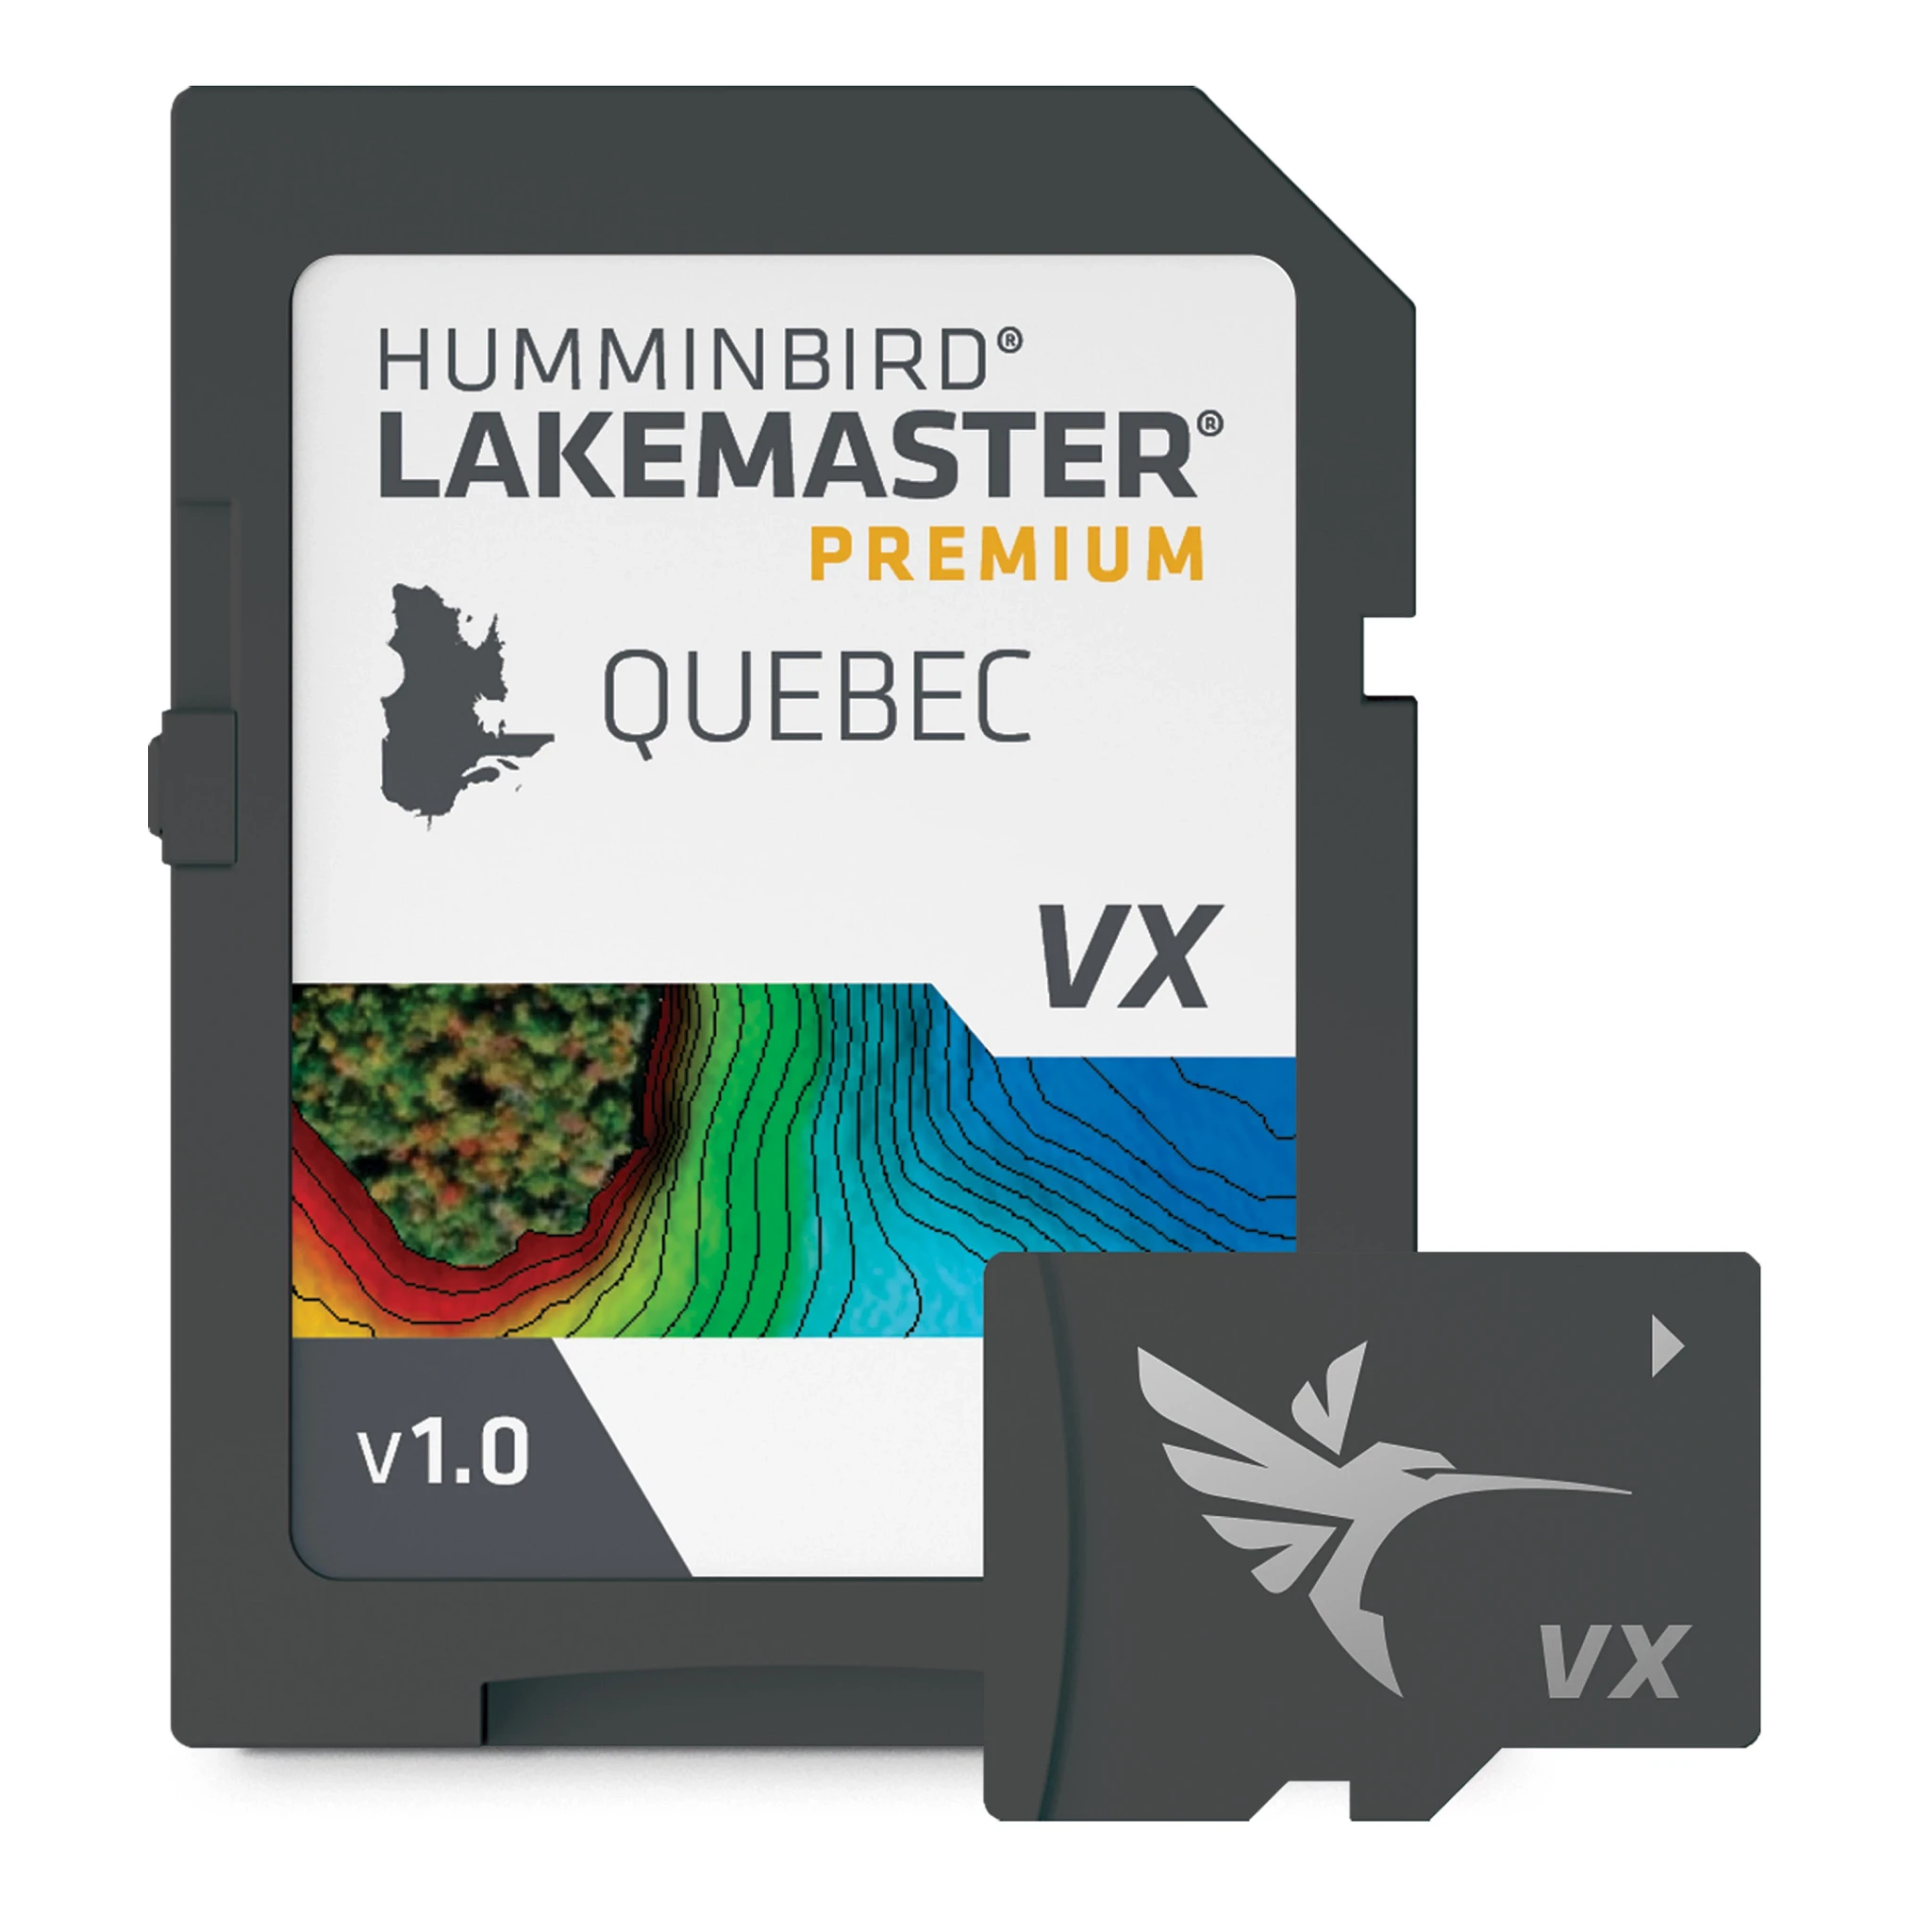 LakeMaster Premium - Quebec V1